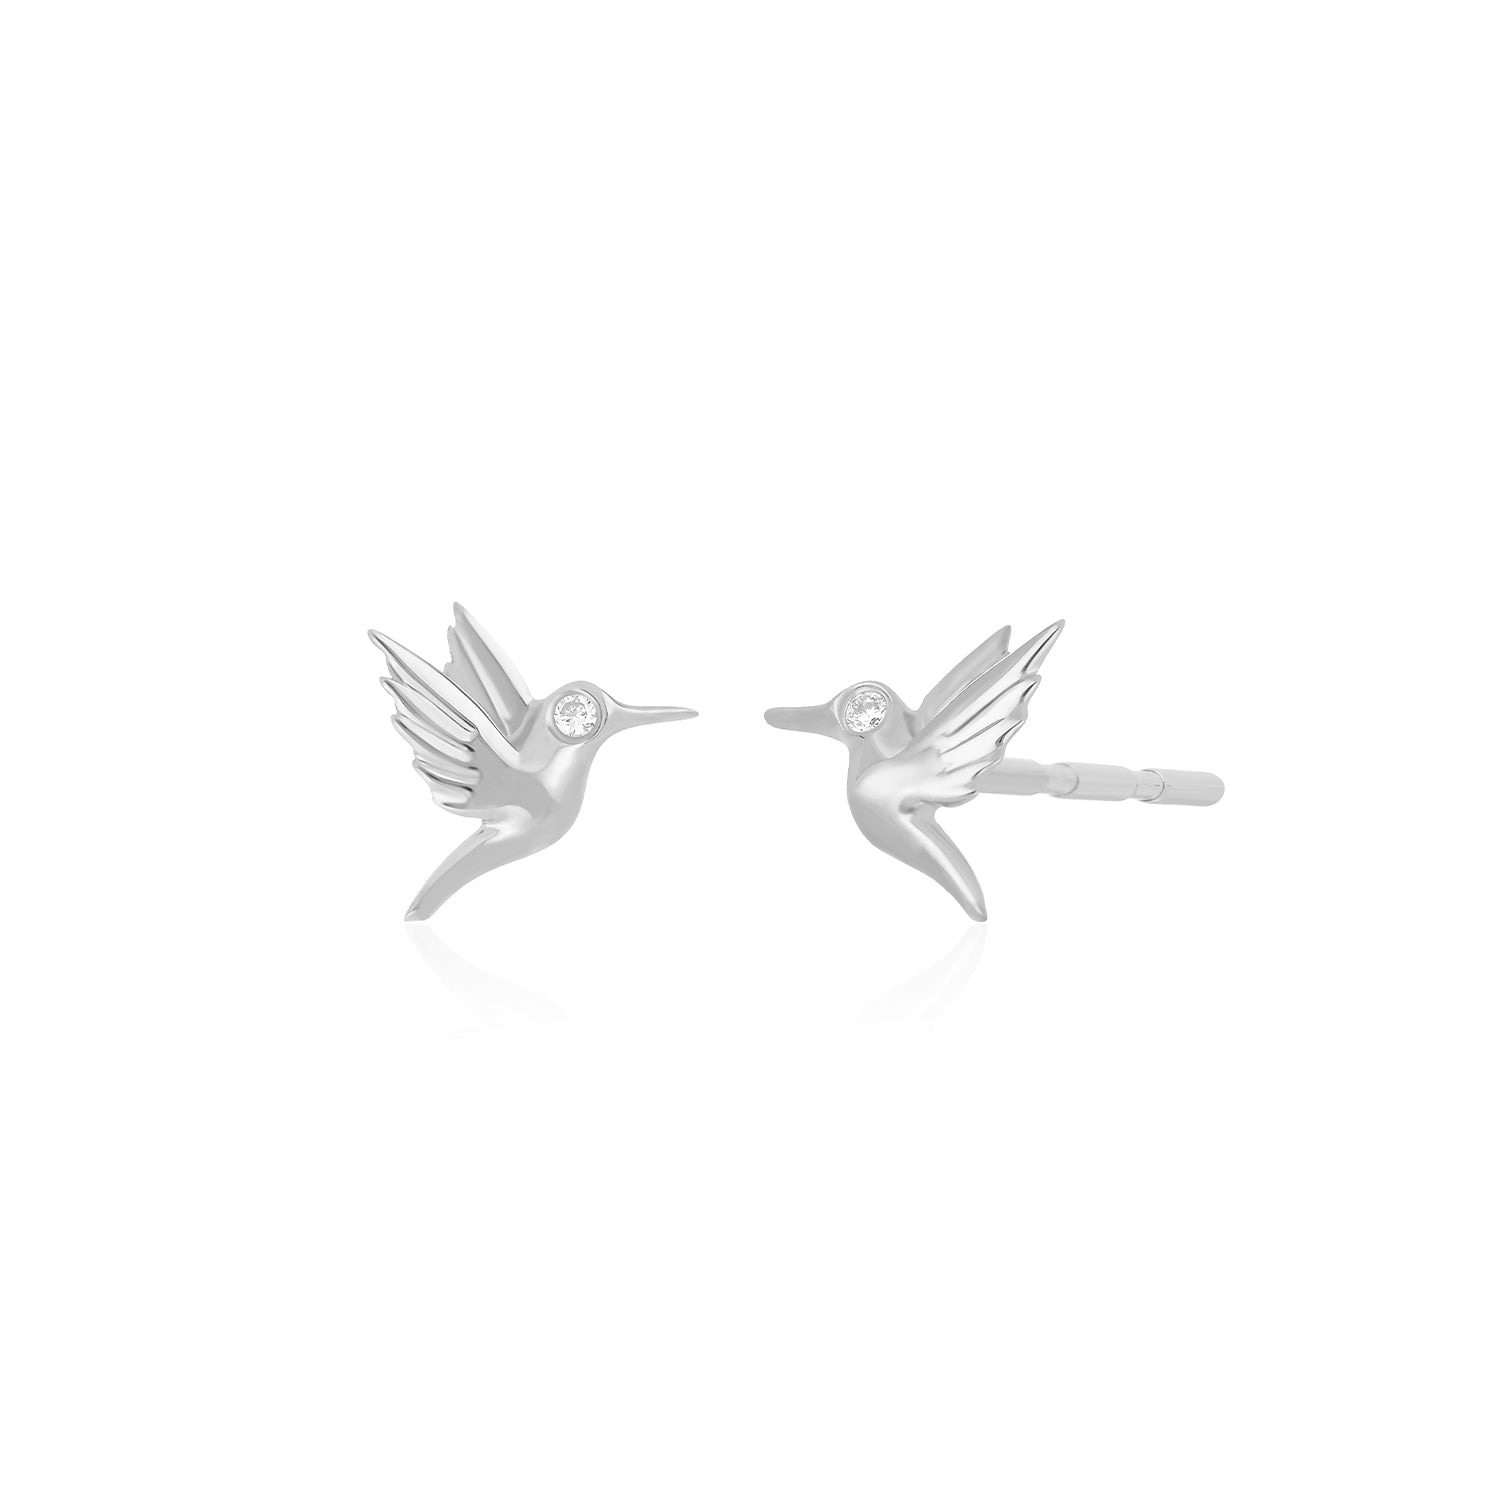 Mini Hummingbird Stud Earring With Diamond Eye in 14k white gold